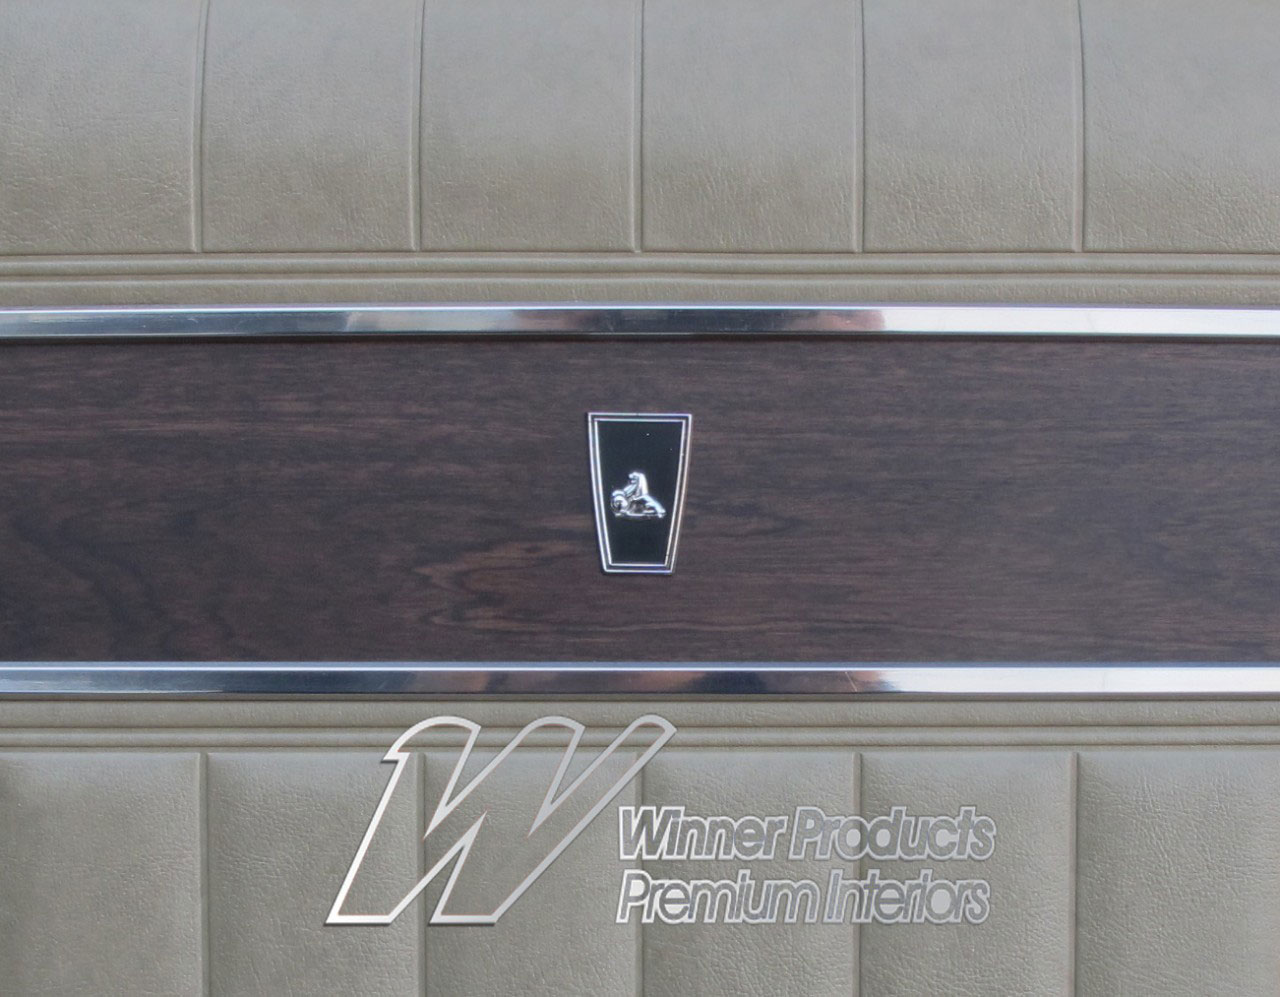 Holden Premier HK Premier Sedan 18S Buckskin Beige & Castillion Weave Door Trims (Image 3 of 3)